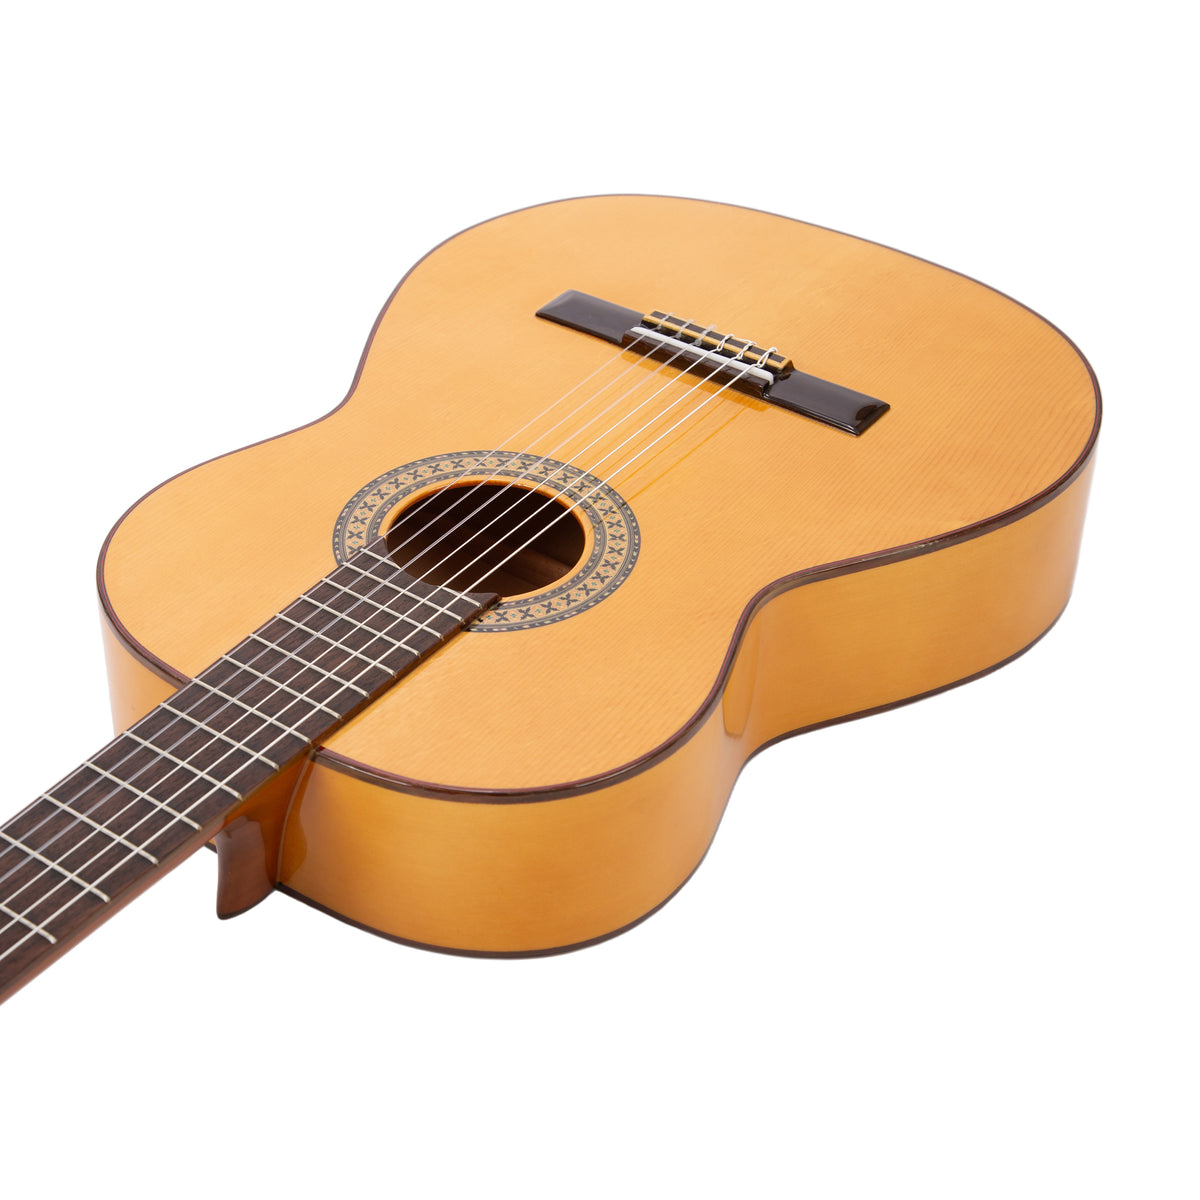 Manuel Rodriguez Model C3F Flamenco Guitar, 2516 – Well Played 